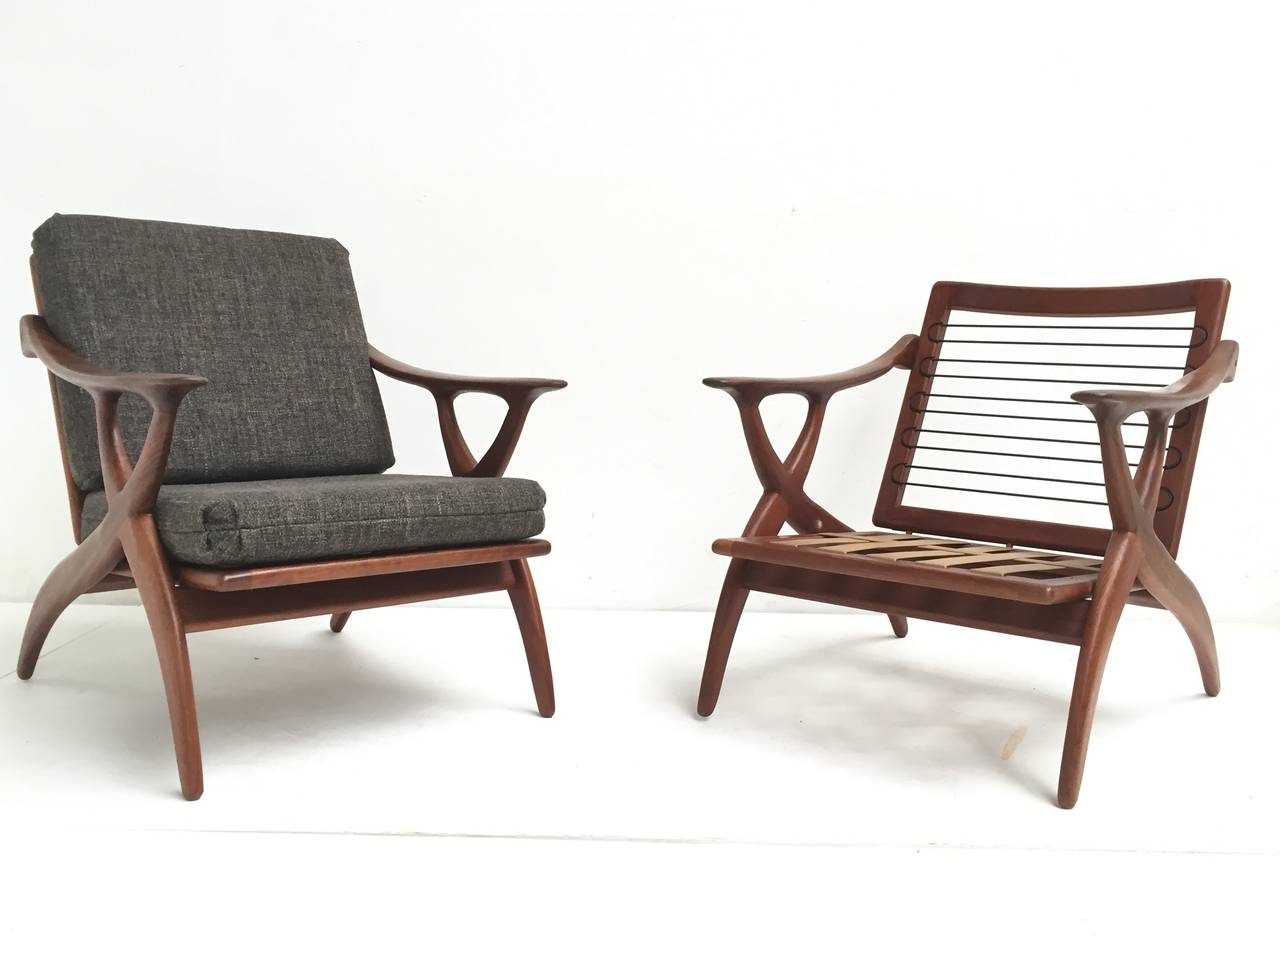 Dutch Pair of Biomorphic Teak Easy Chairs by De Ster, Gelderland, 1950s